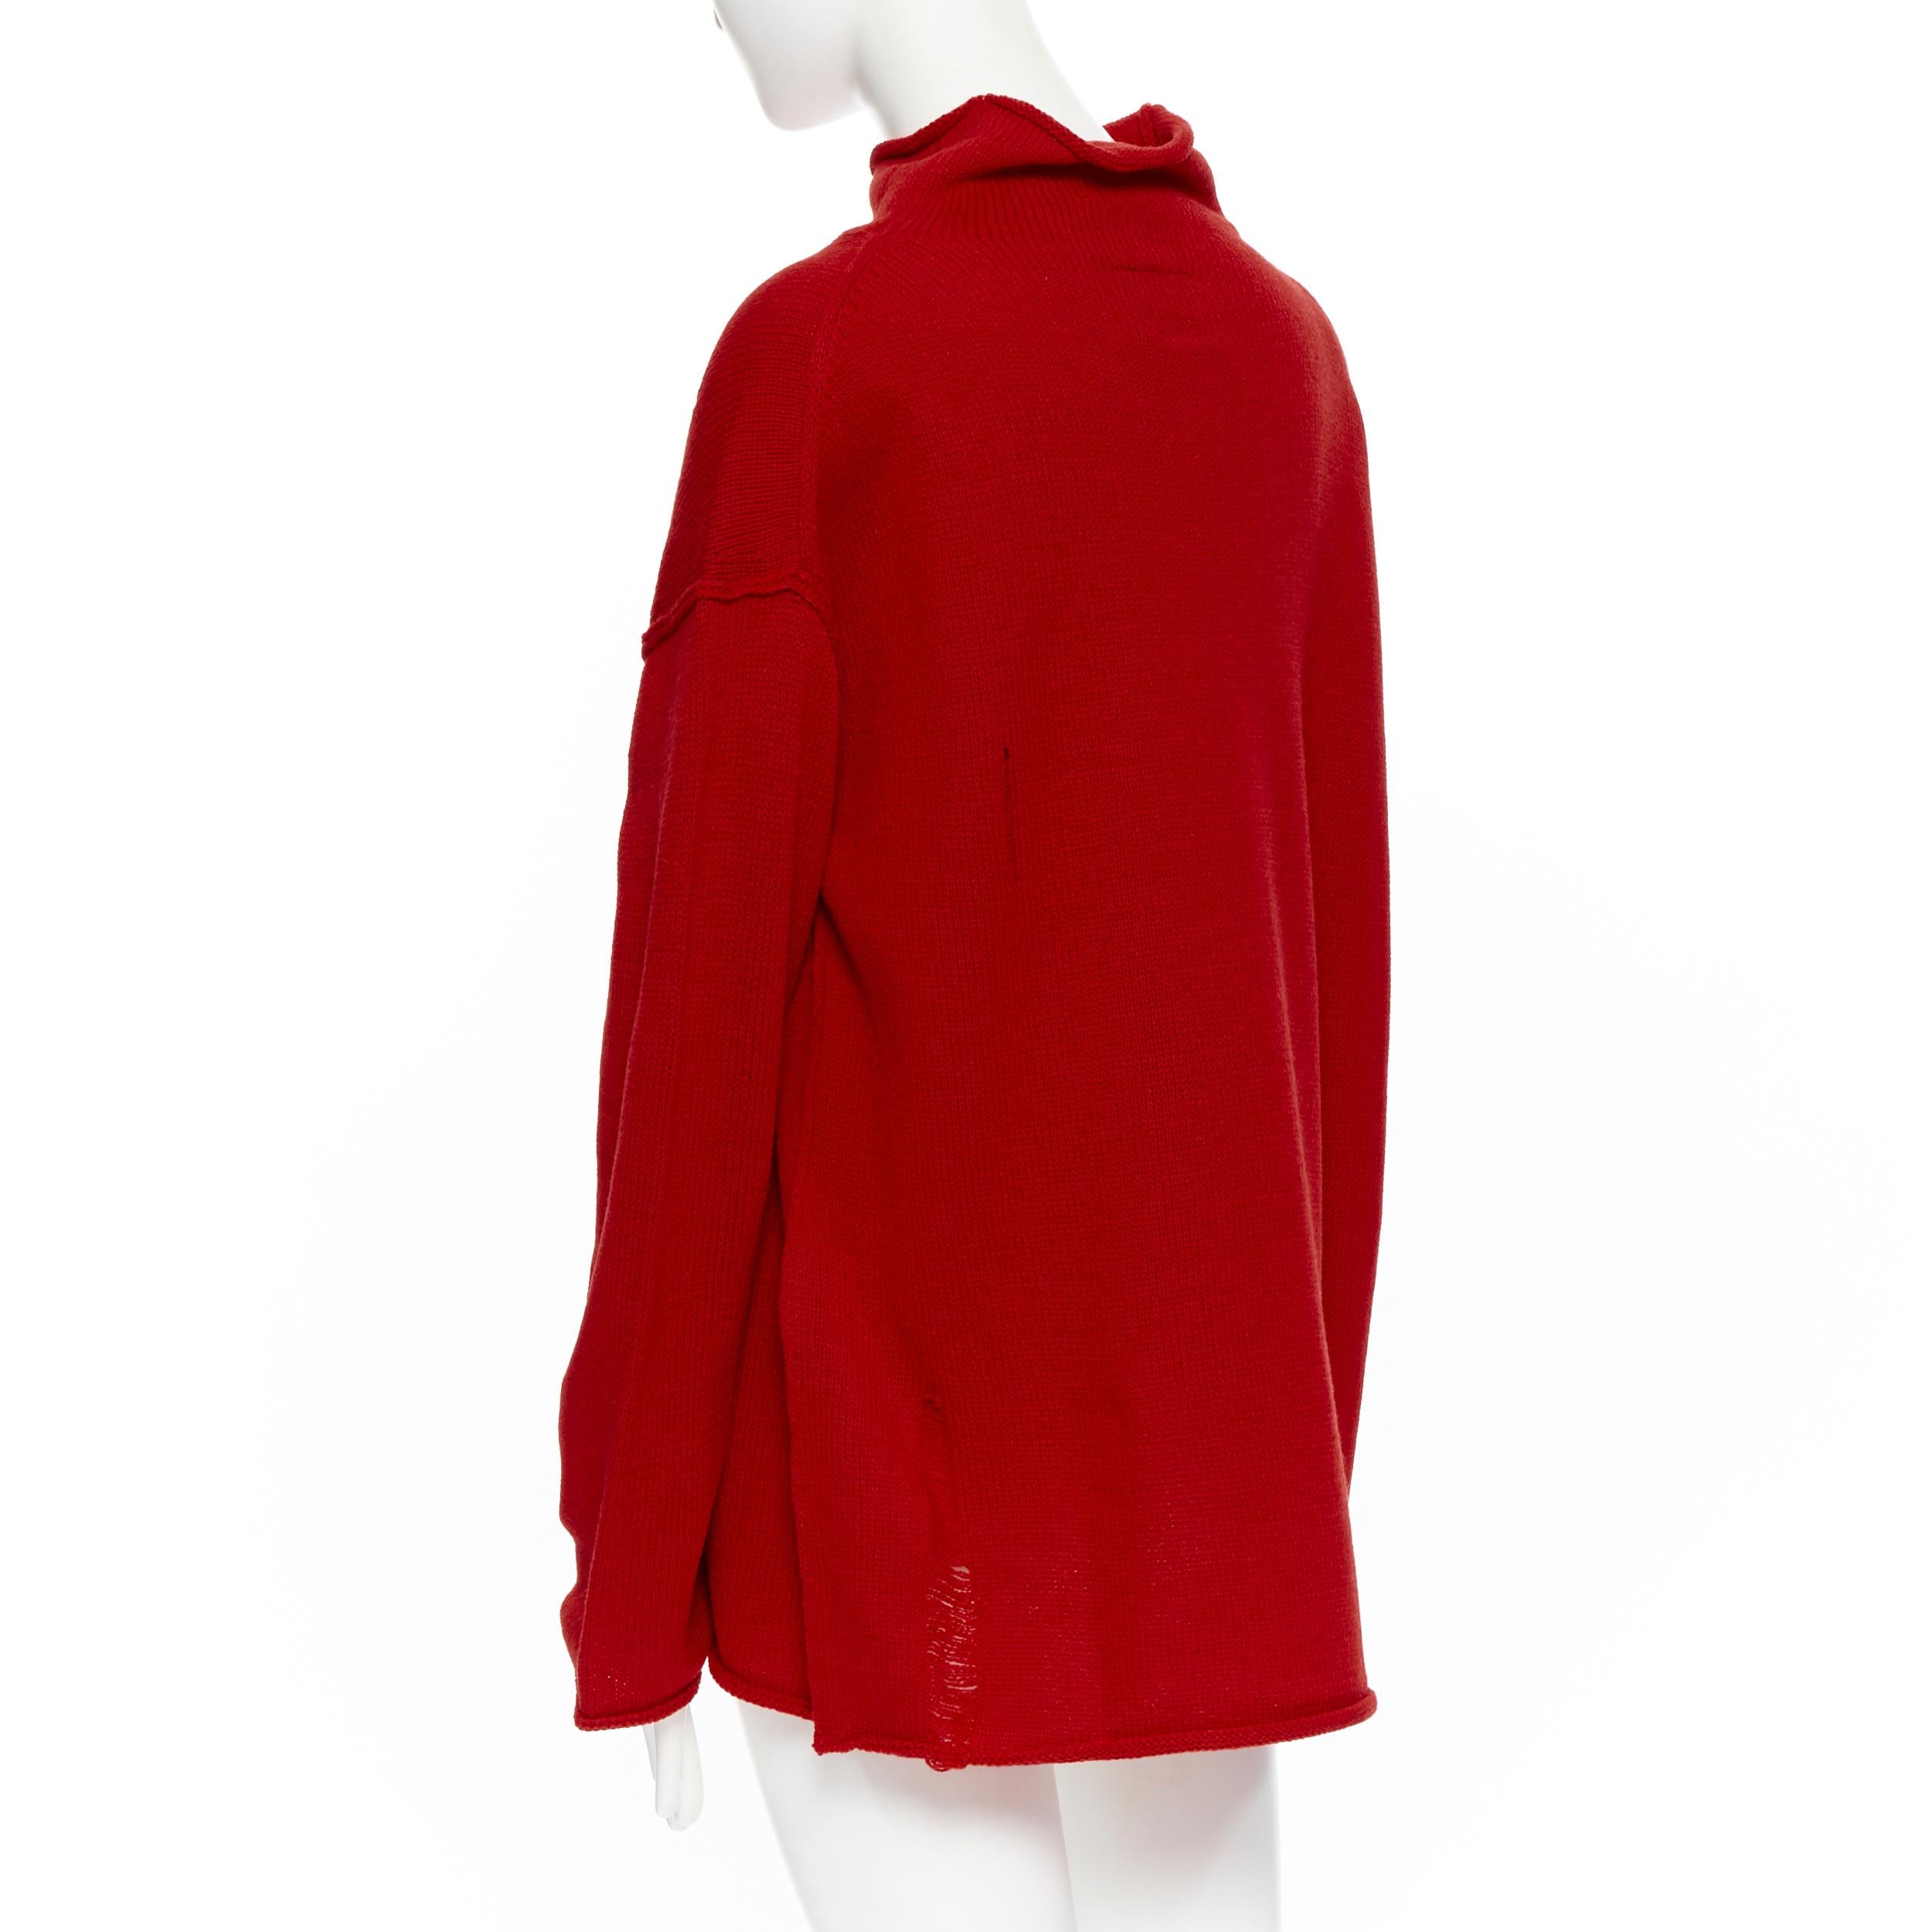 new B YOHJI YAMAMOTO Unisex 100% wool red distressed holey raw edge pullover M 2